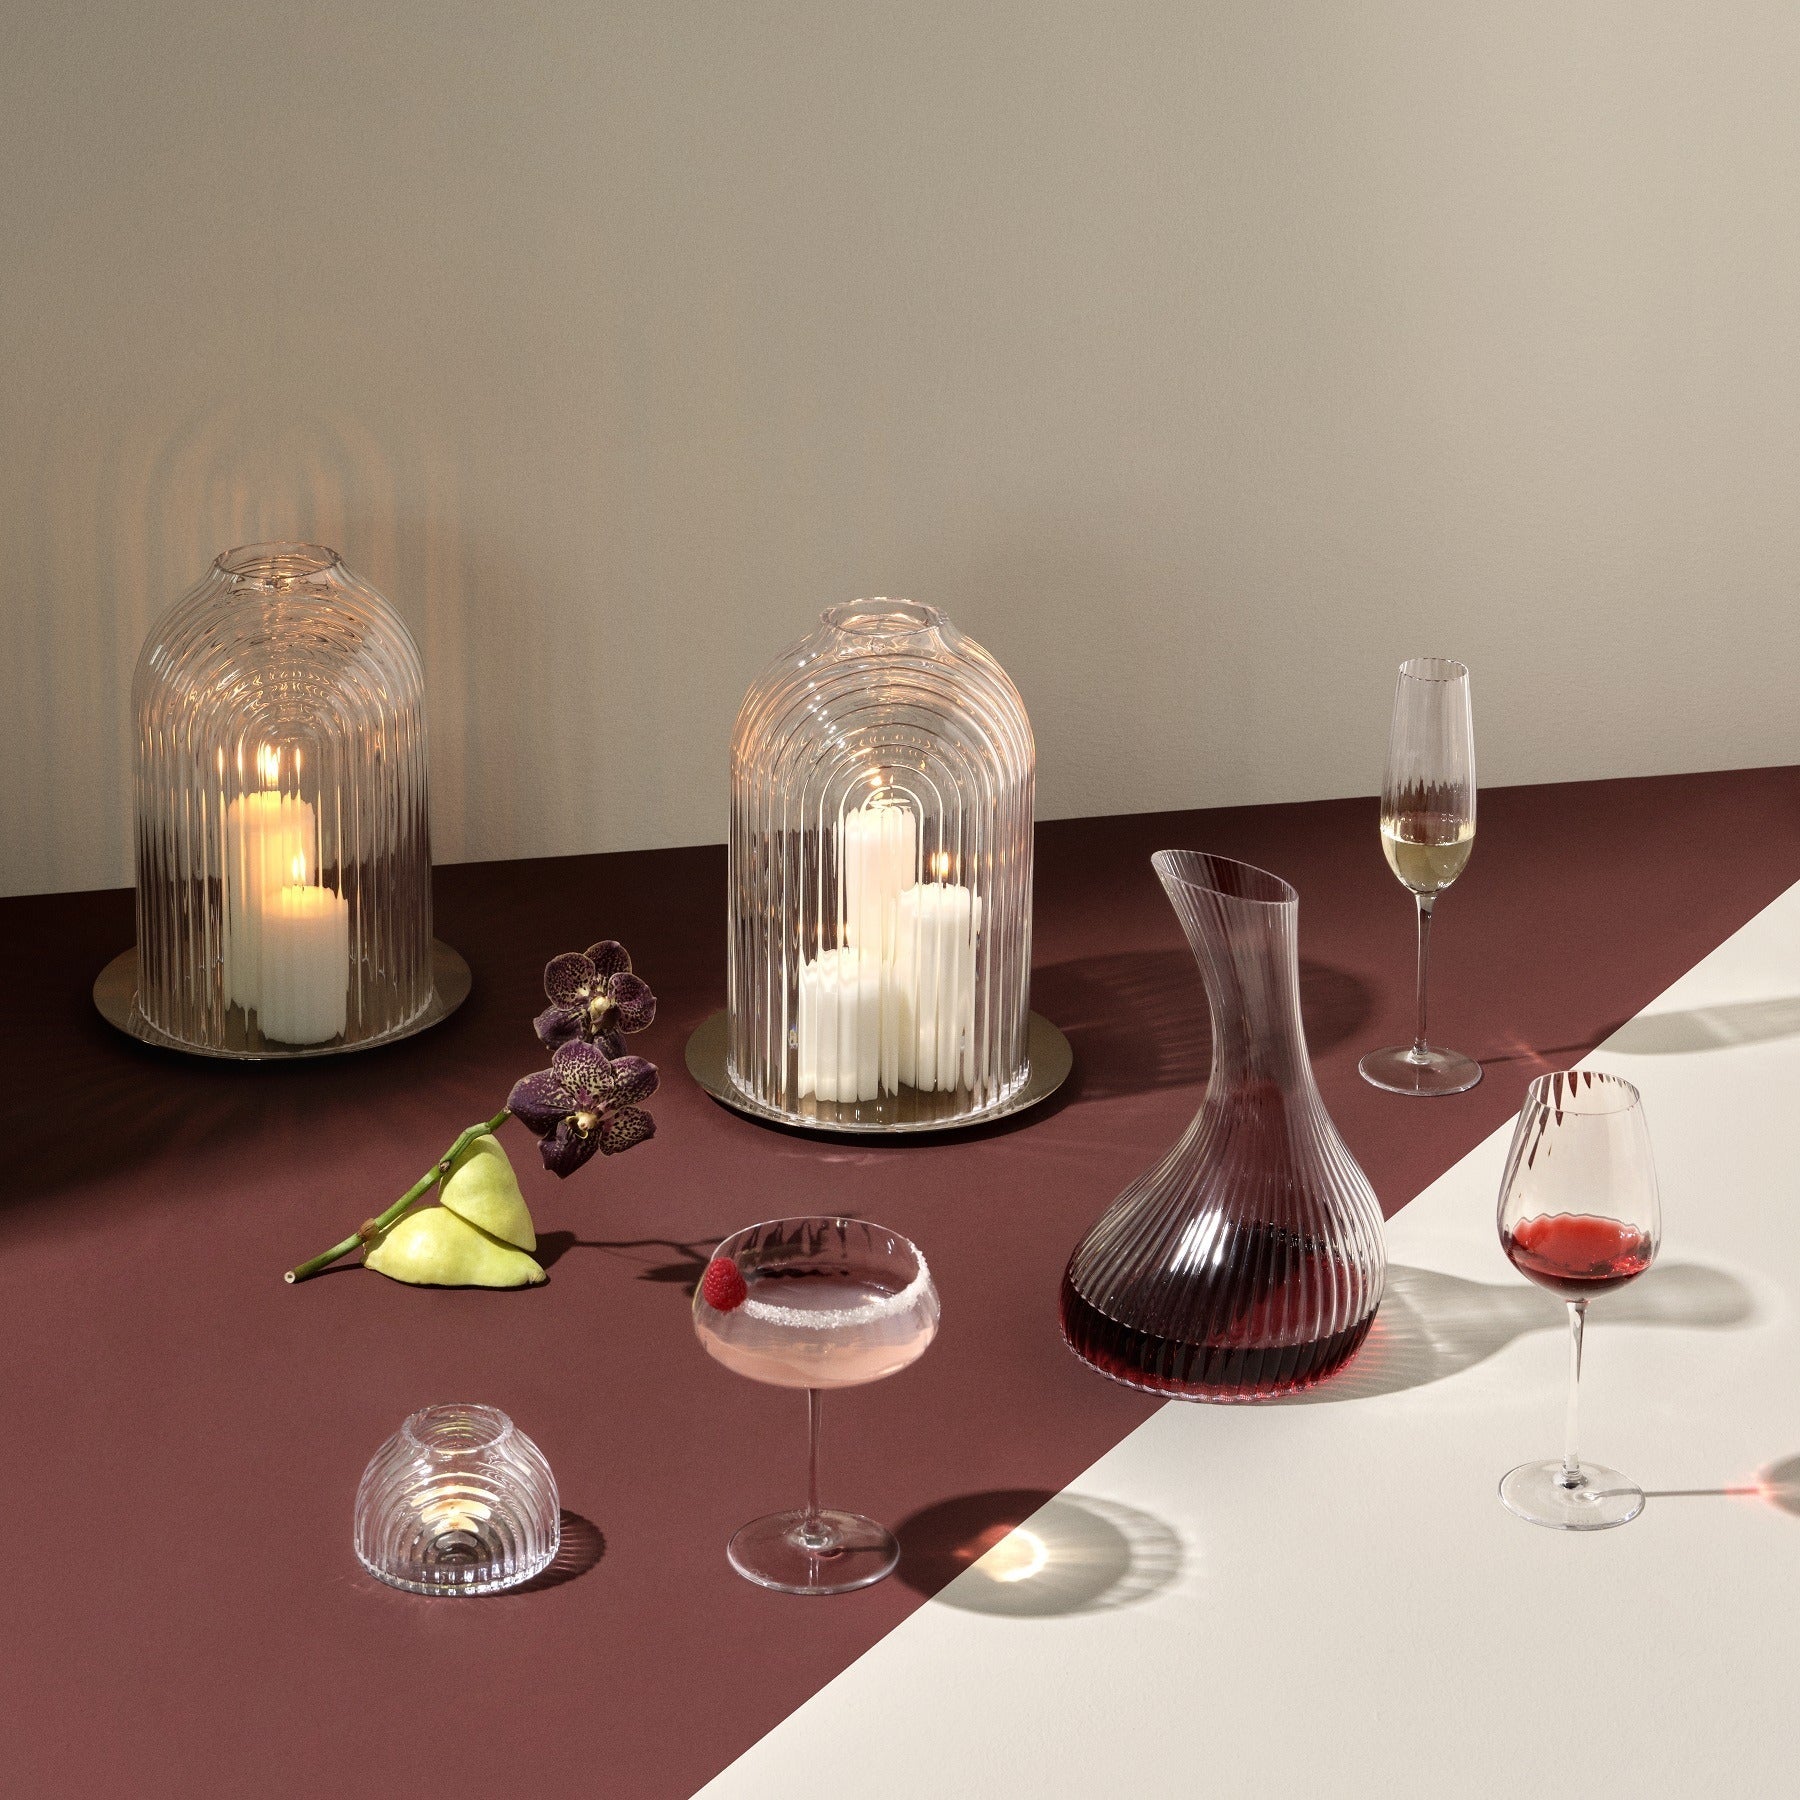 Nude Glass Stem Zero Elegant Red Wine Glass Large